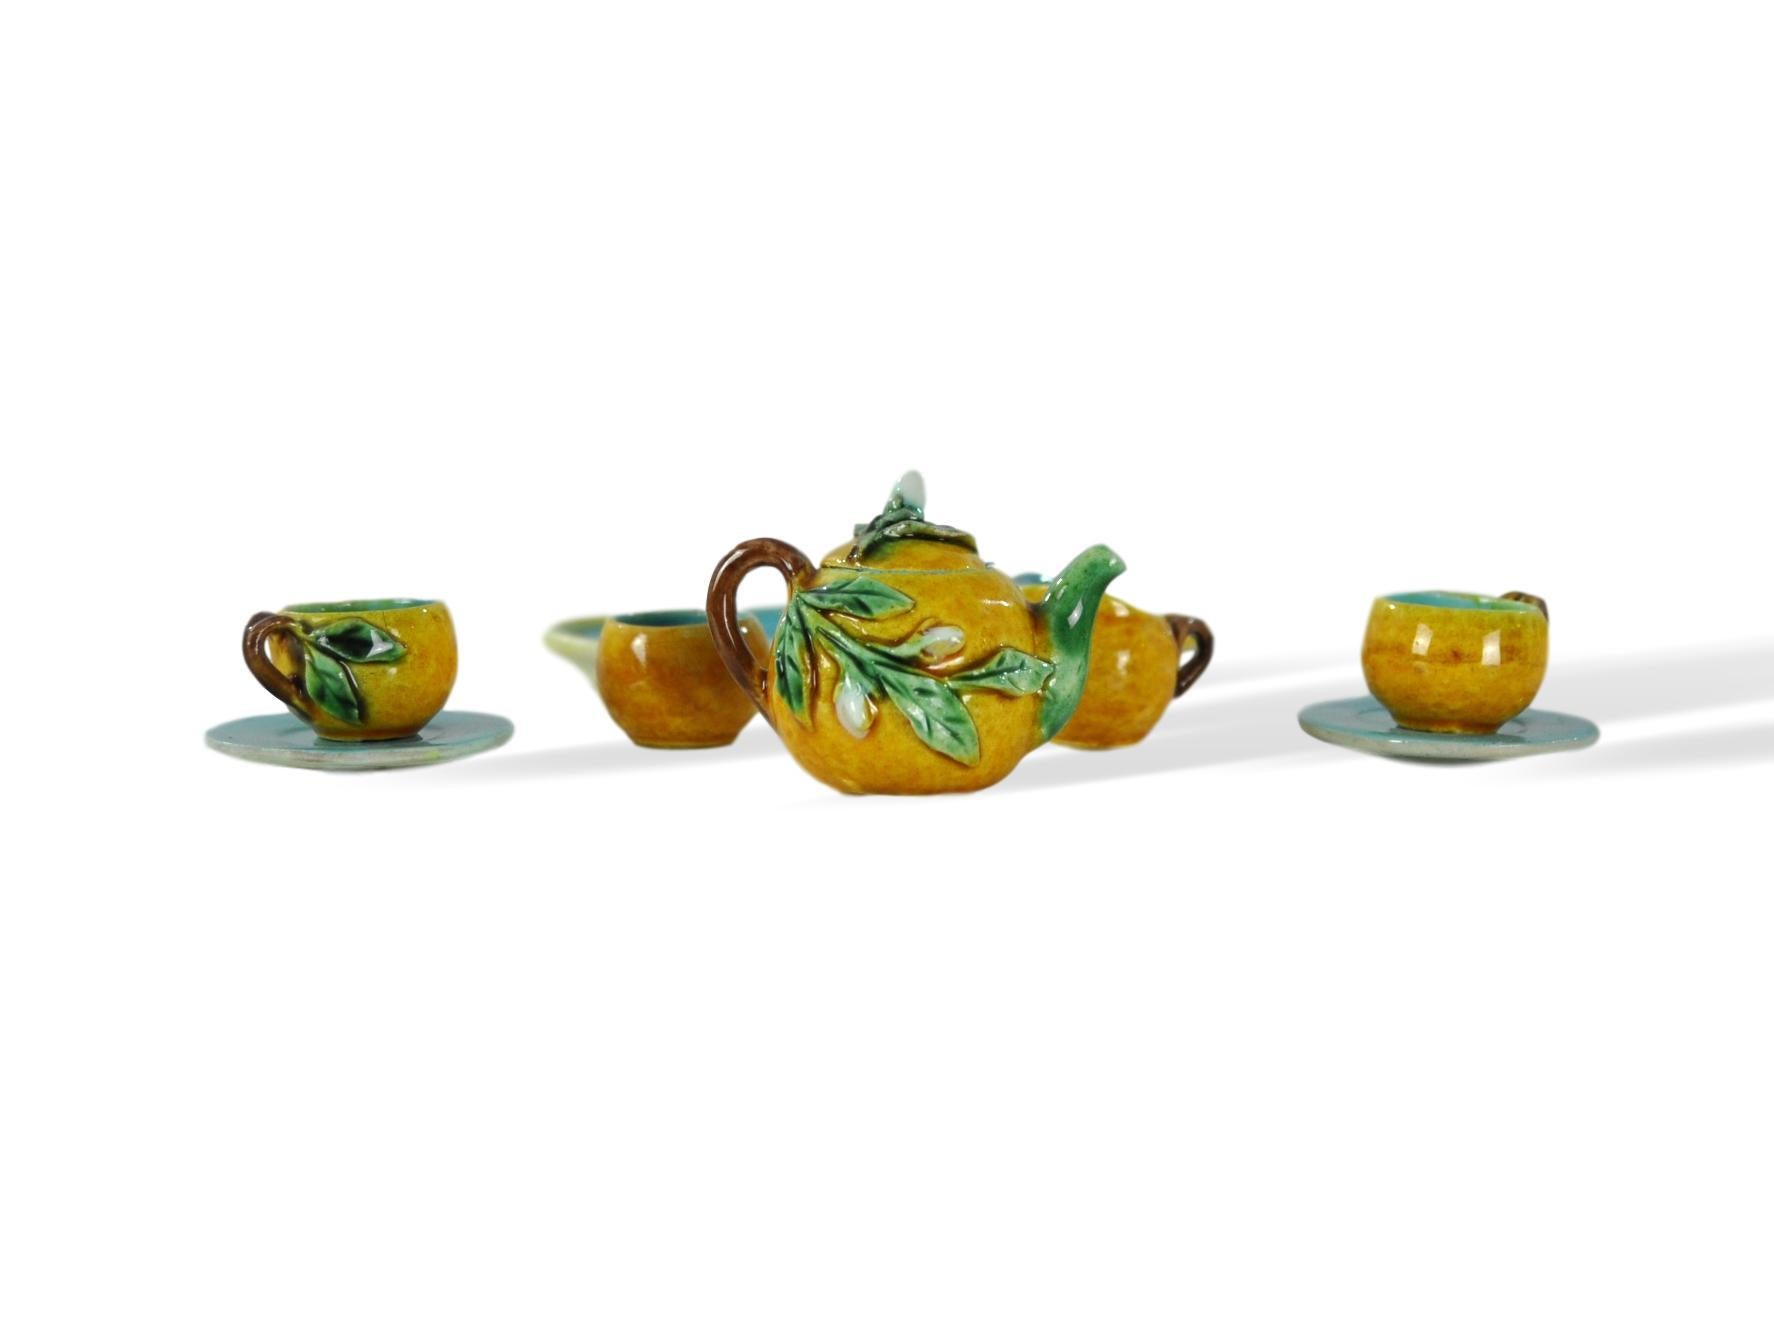 miniature tea sets collectibles